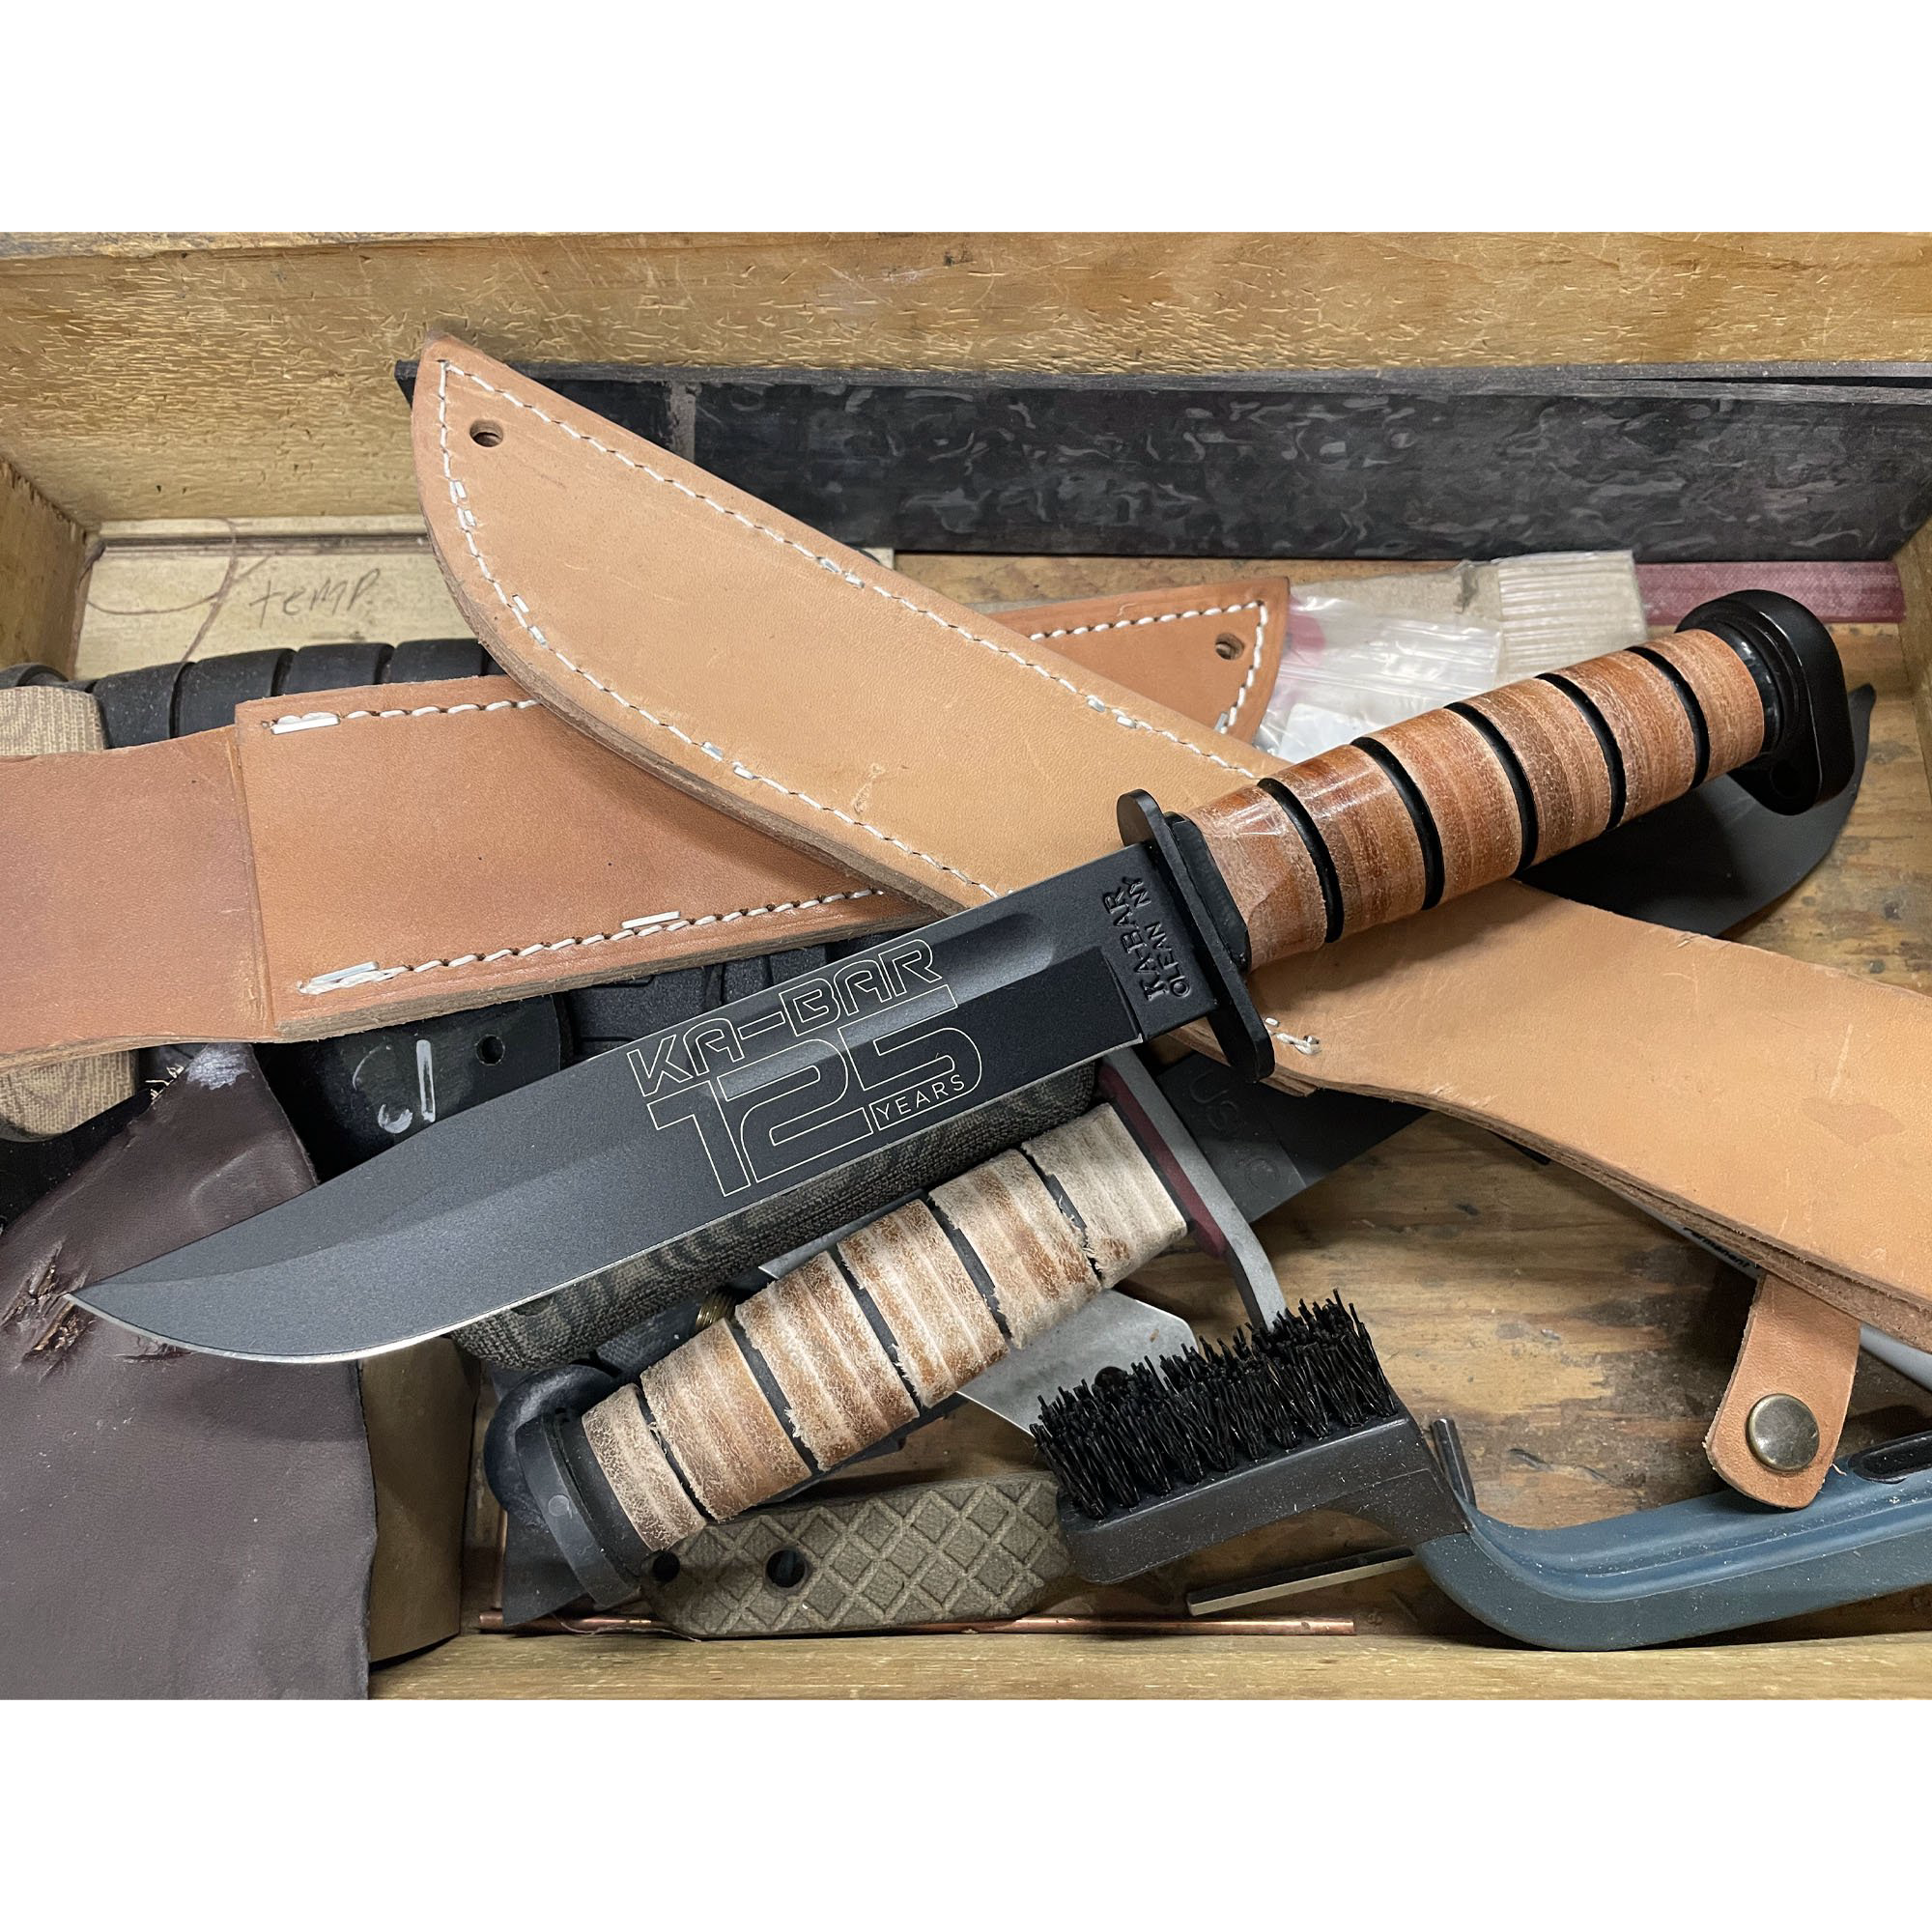 KA-BAR 125TH Anniversary Knife product image